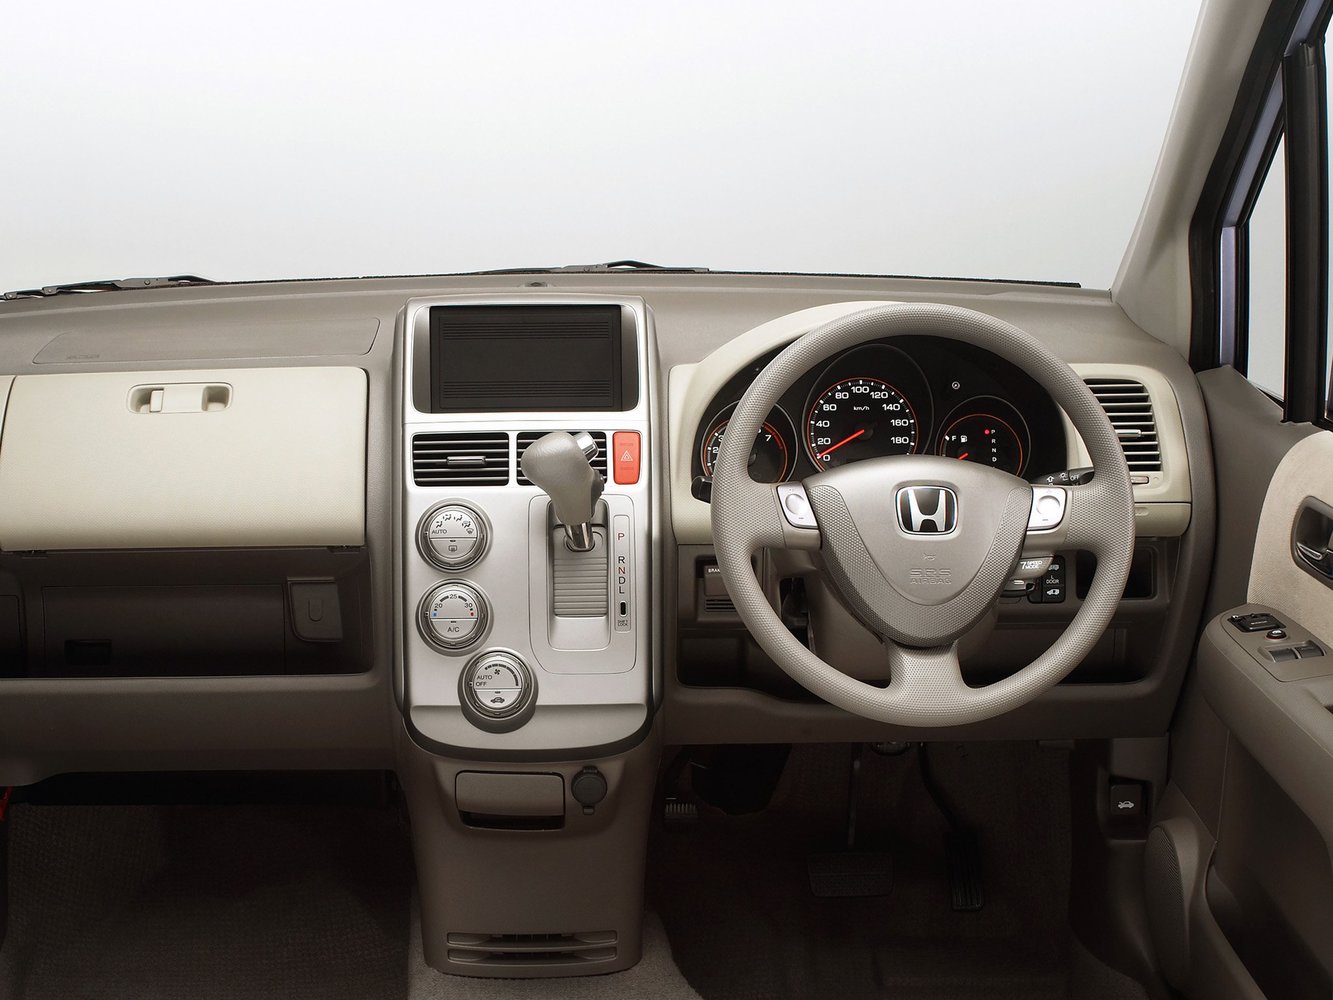 минивэн Spike Honda Mobilio 2004 - 2008г выпуска модификация 1.5 CVT (110 л.с.)